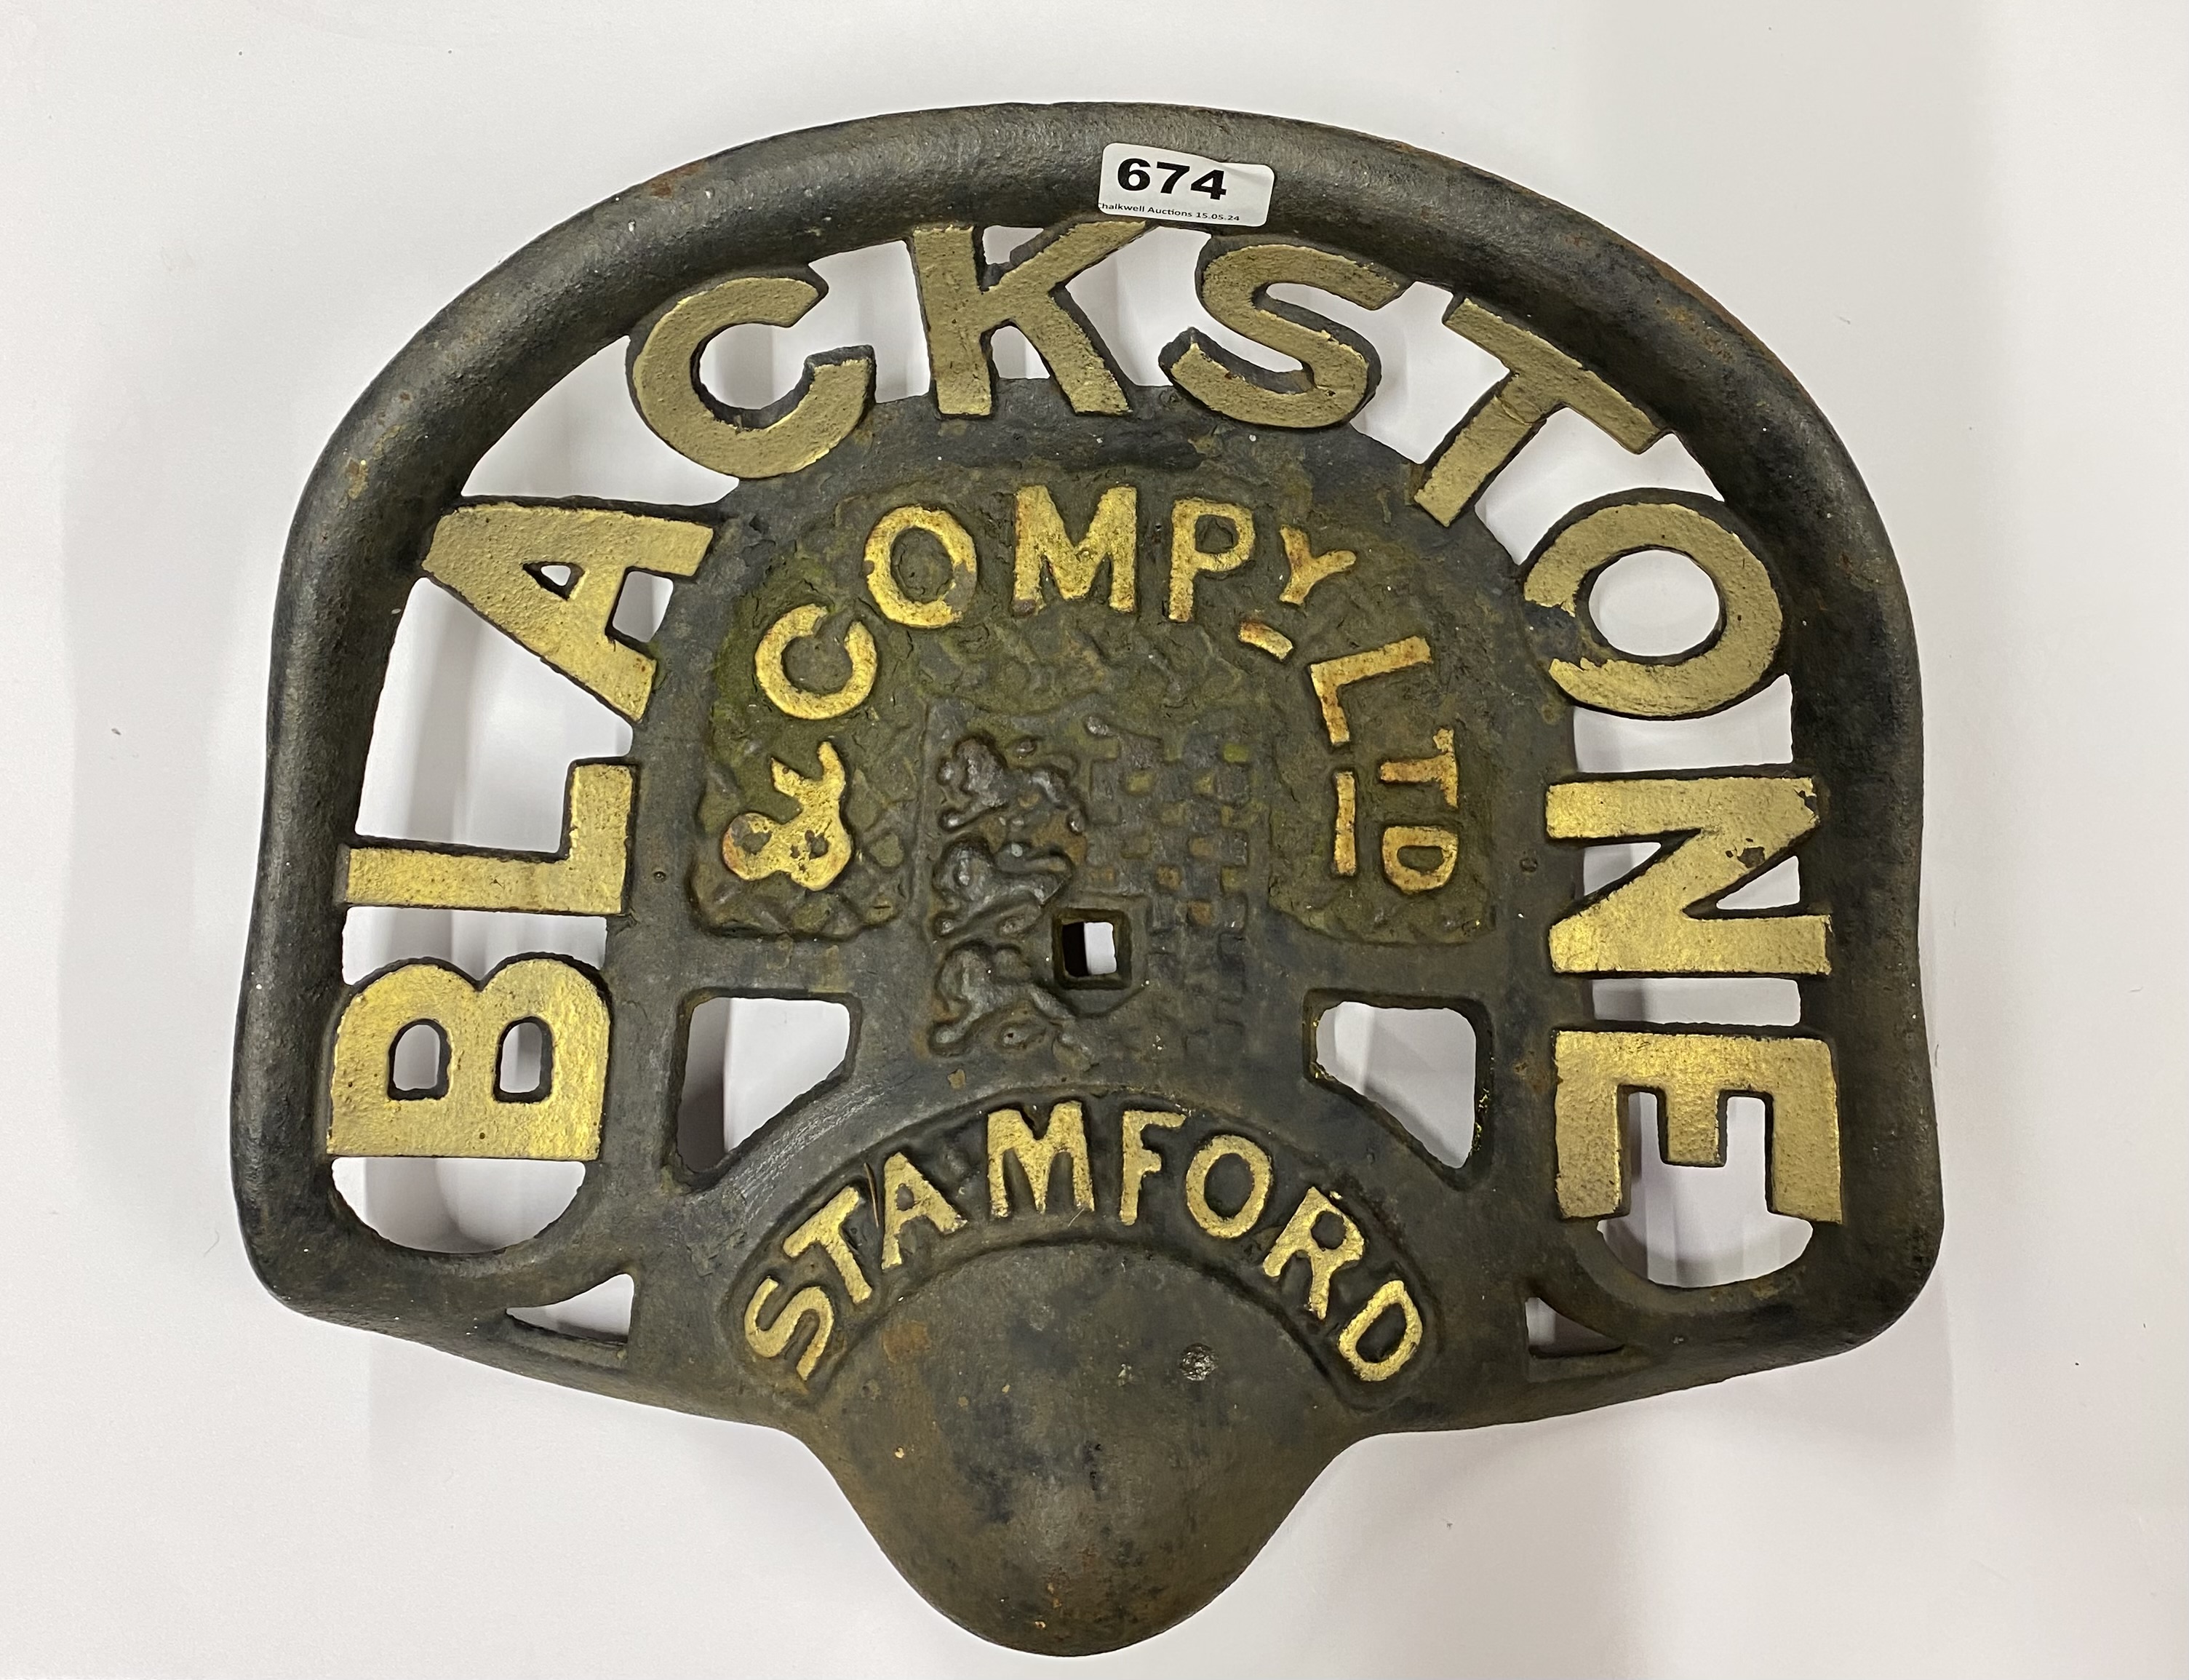 An original cast iron Blackstone and company tractor seat.